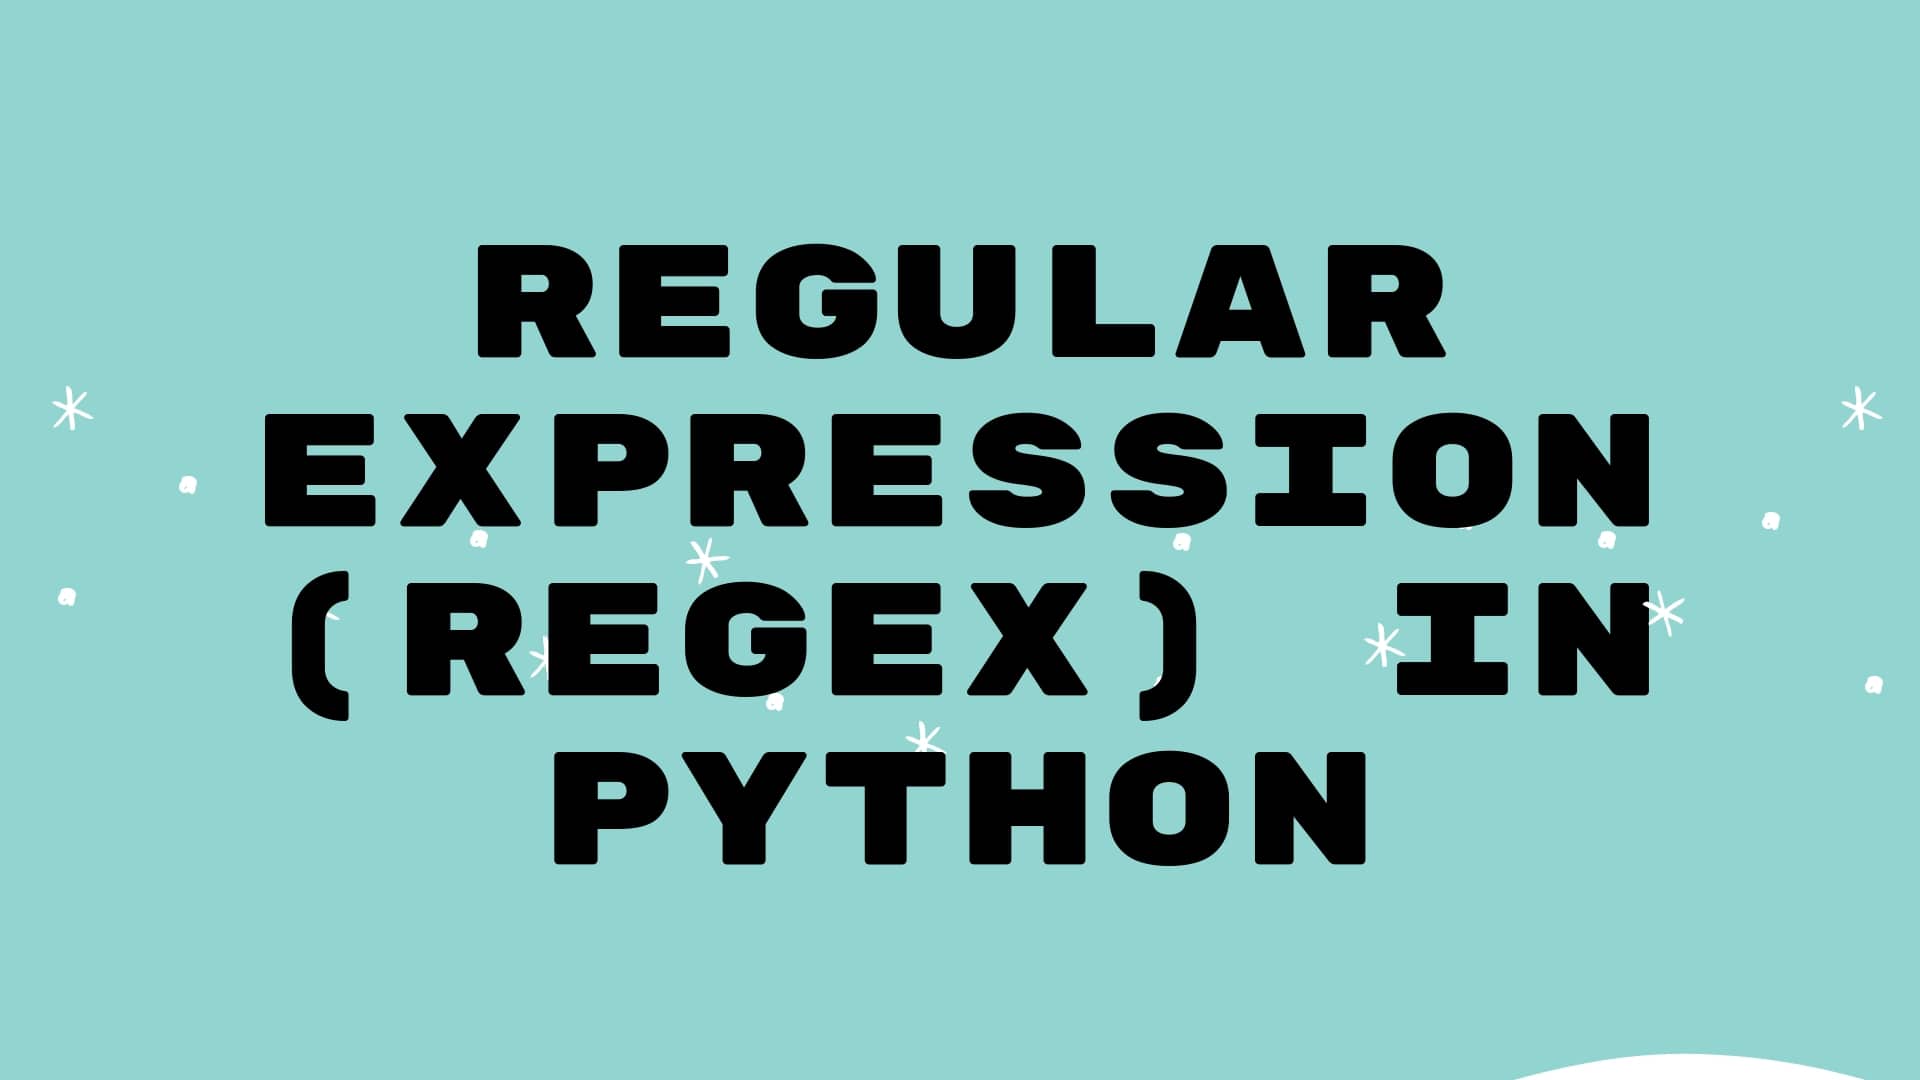 Regular expression in python